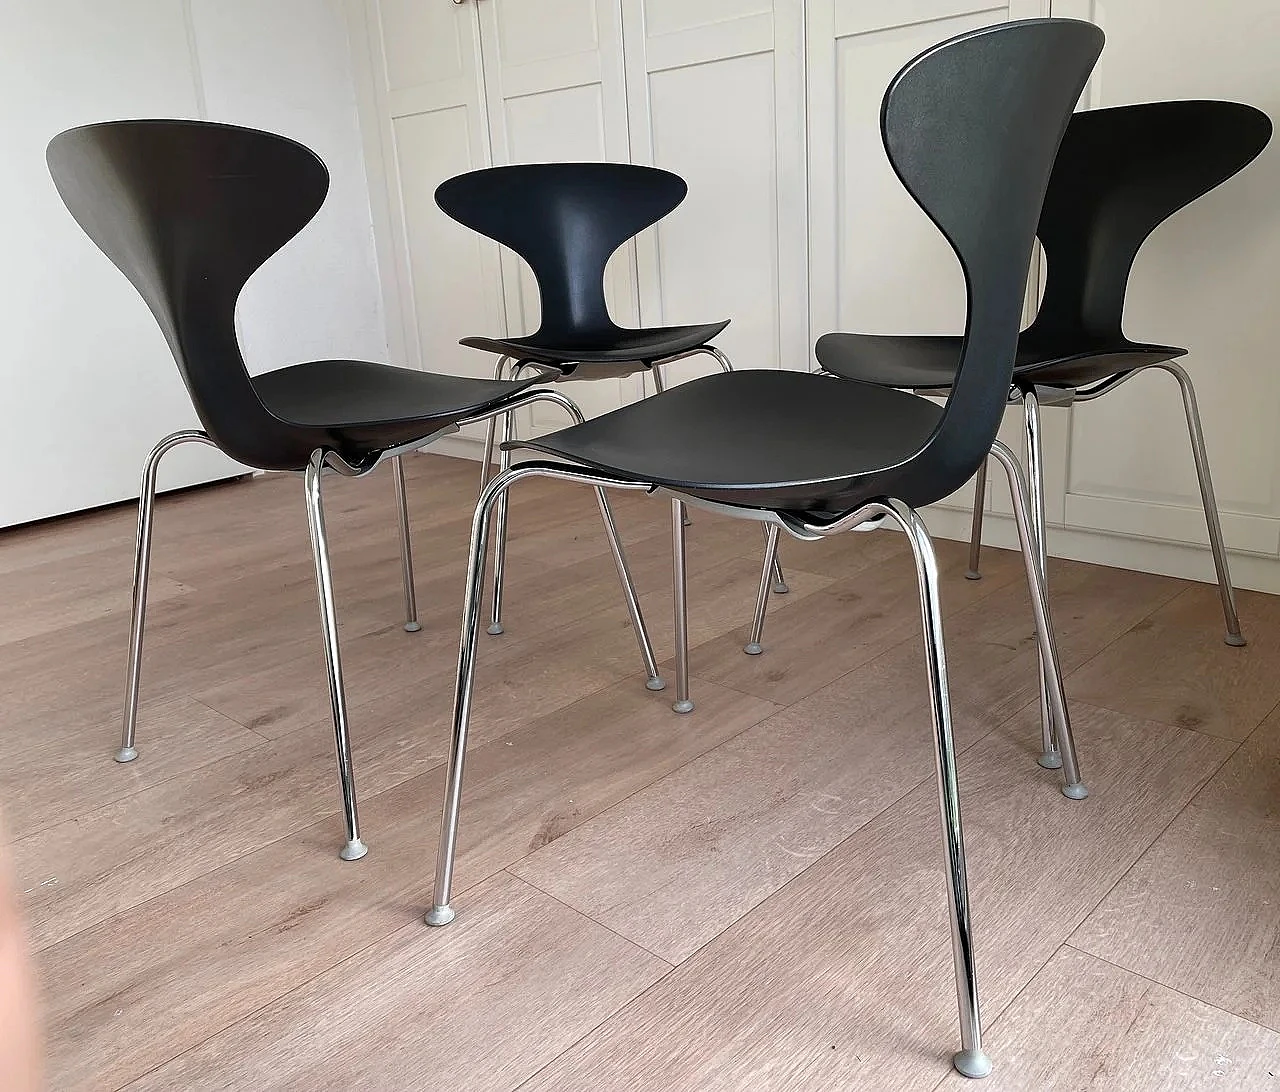 4 Orbit stackable chairs by Lovegrove & Bernhardt for Danerka, 2000s 2